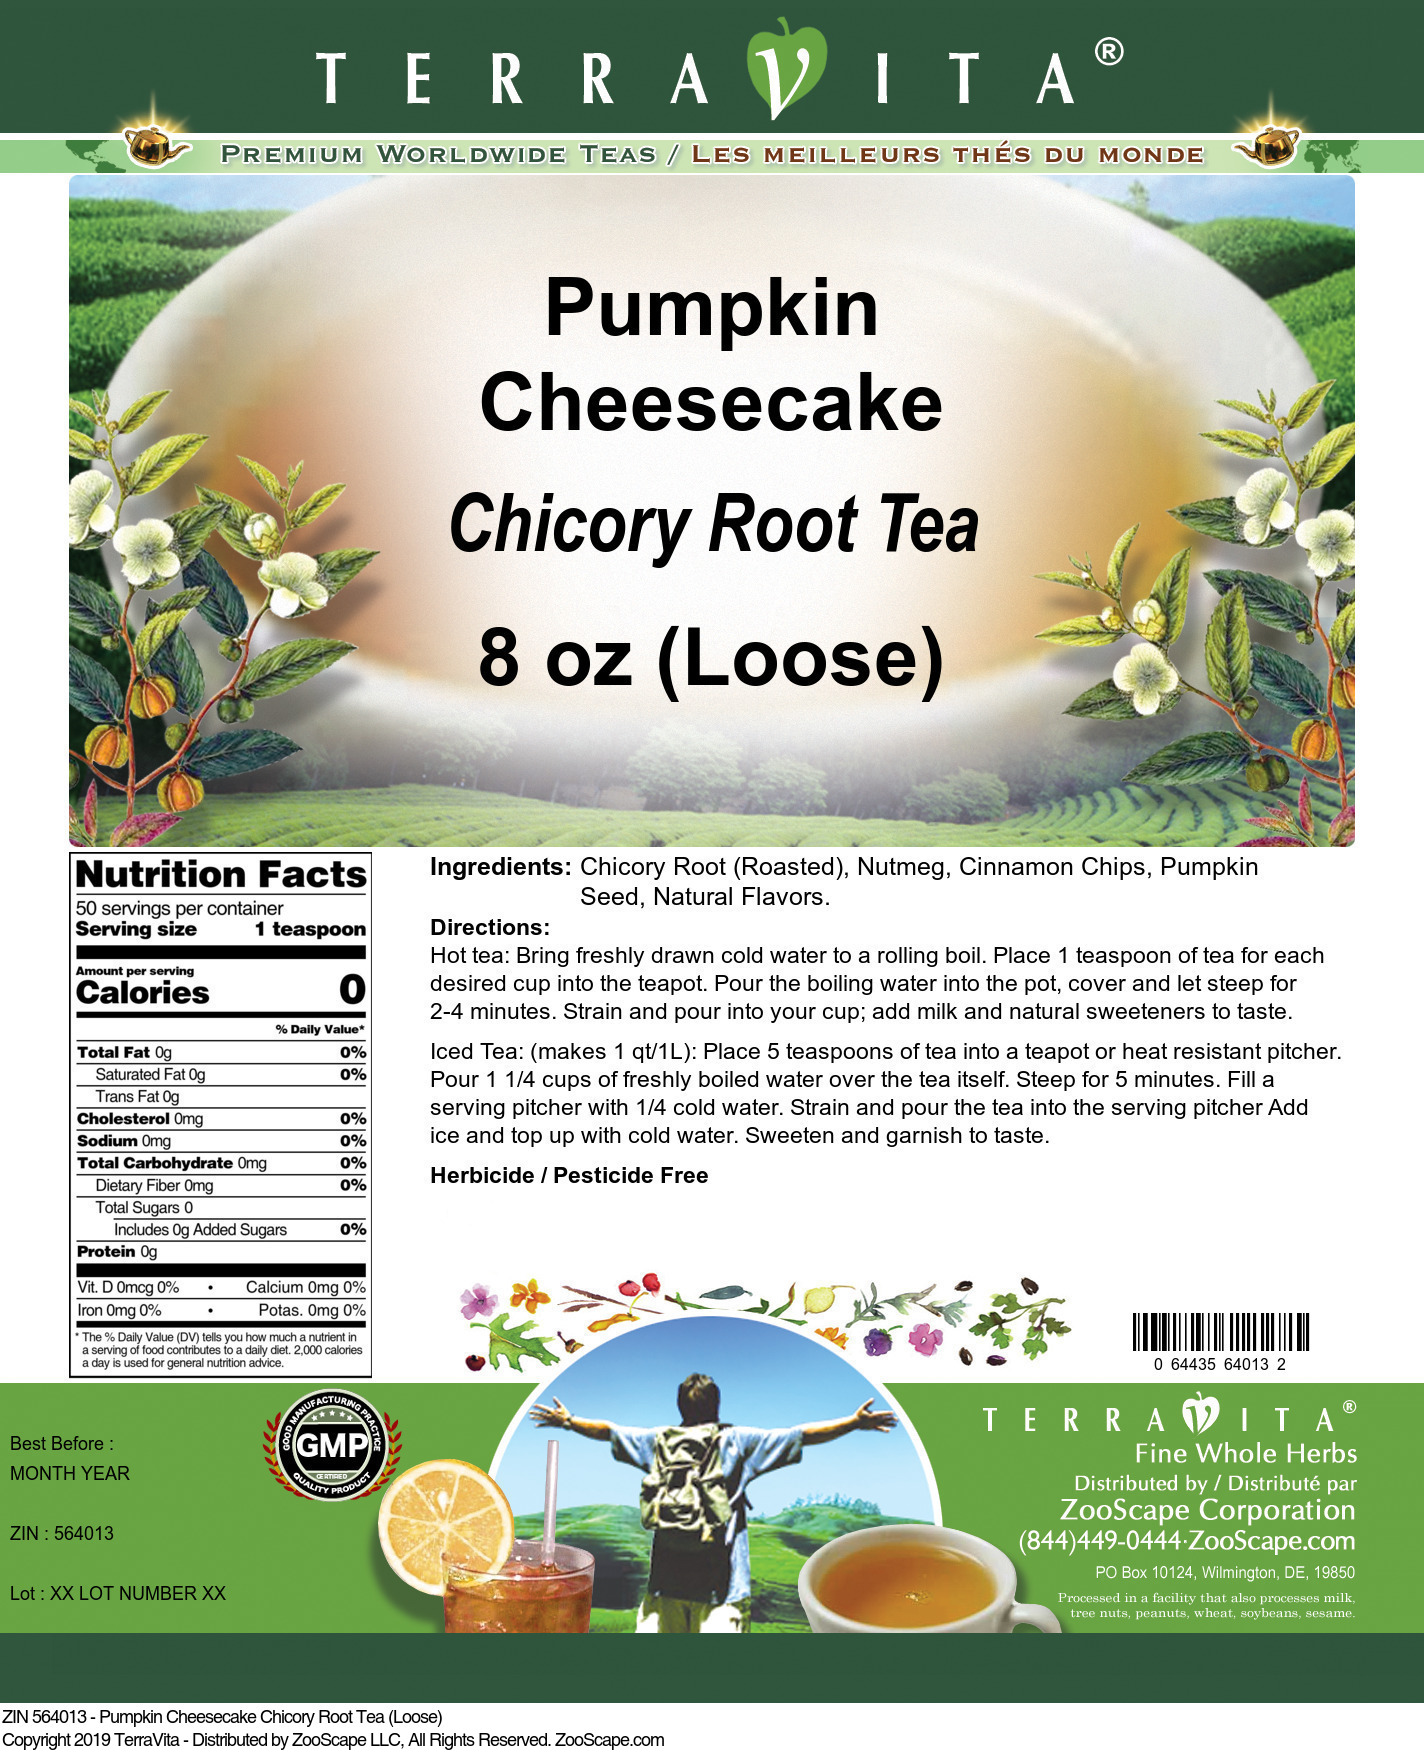 Pumpkin Cheesecake Chicory Root Tea (Loose) - Label